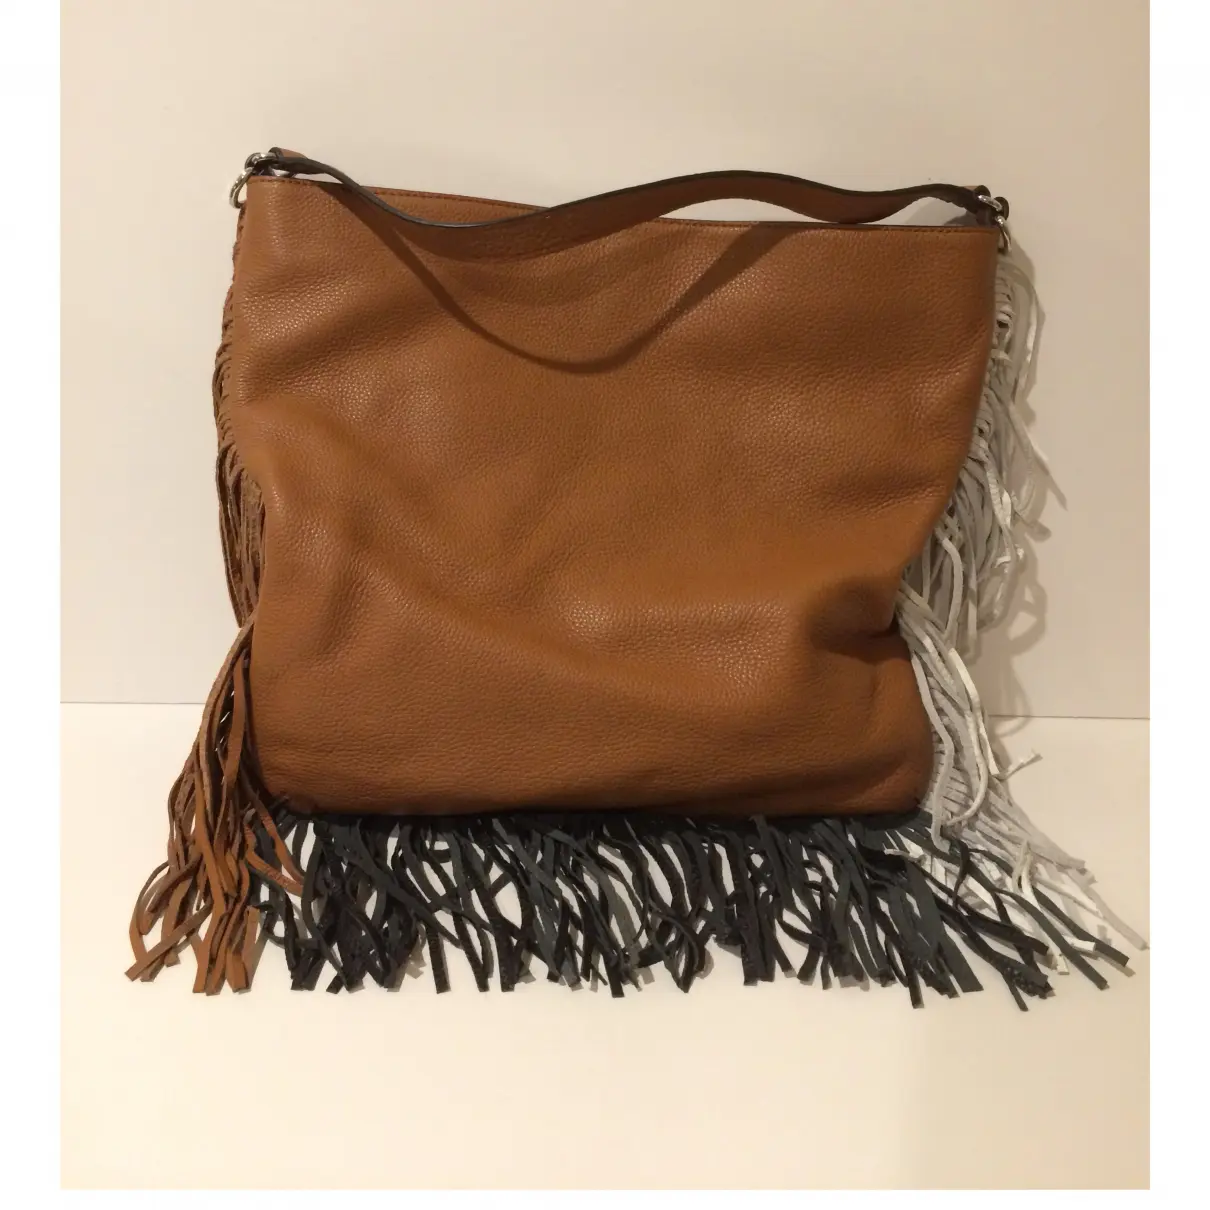 Buy Rebecca Minkoff Leather handbag online